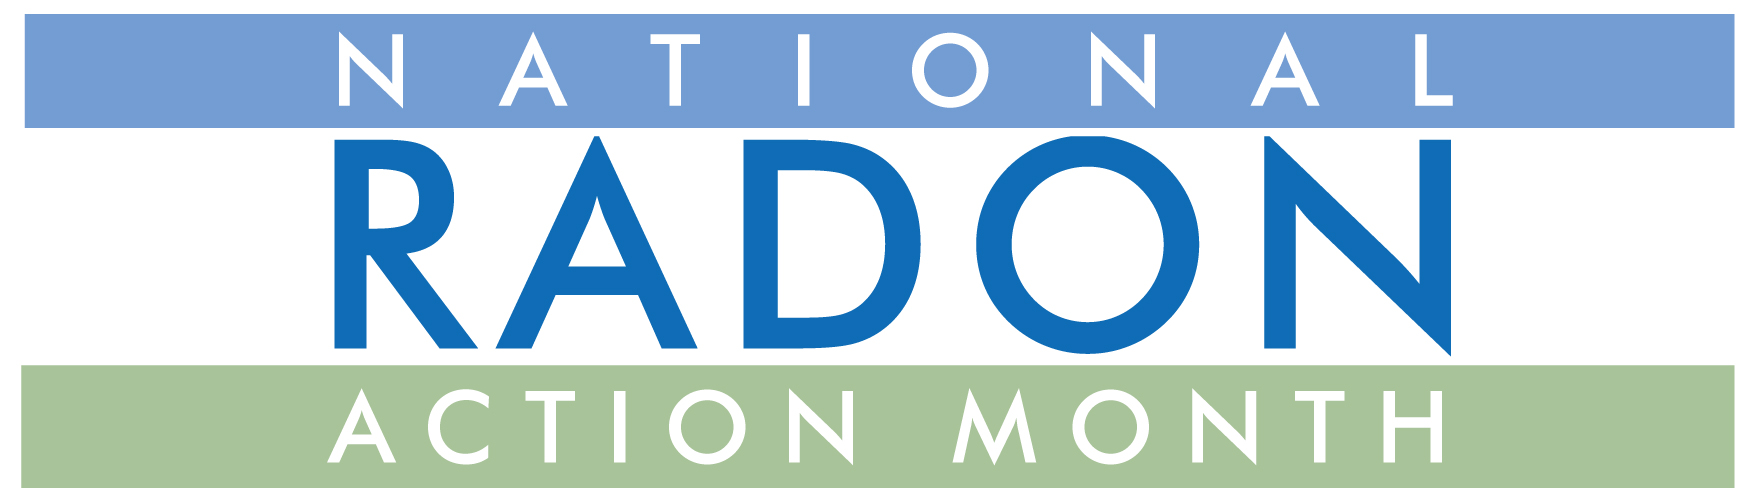 National Radon Action Month Media Resources and Graphics Radon US EPA